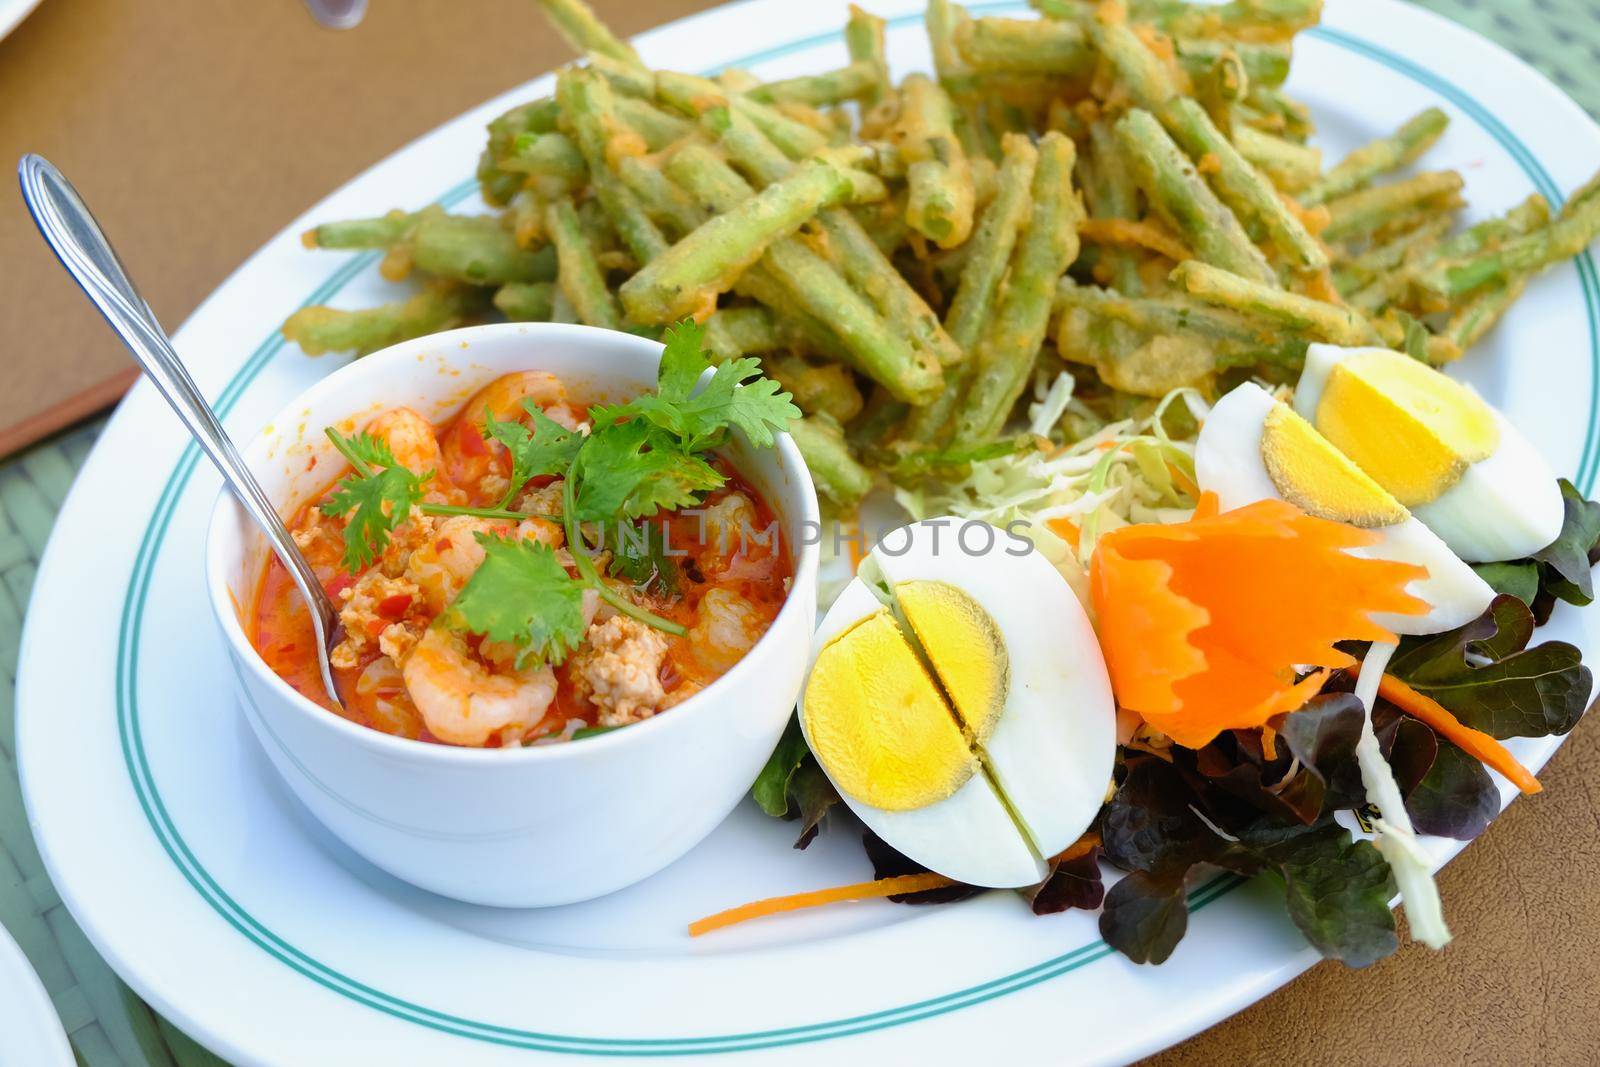 Thai foods on the table